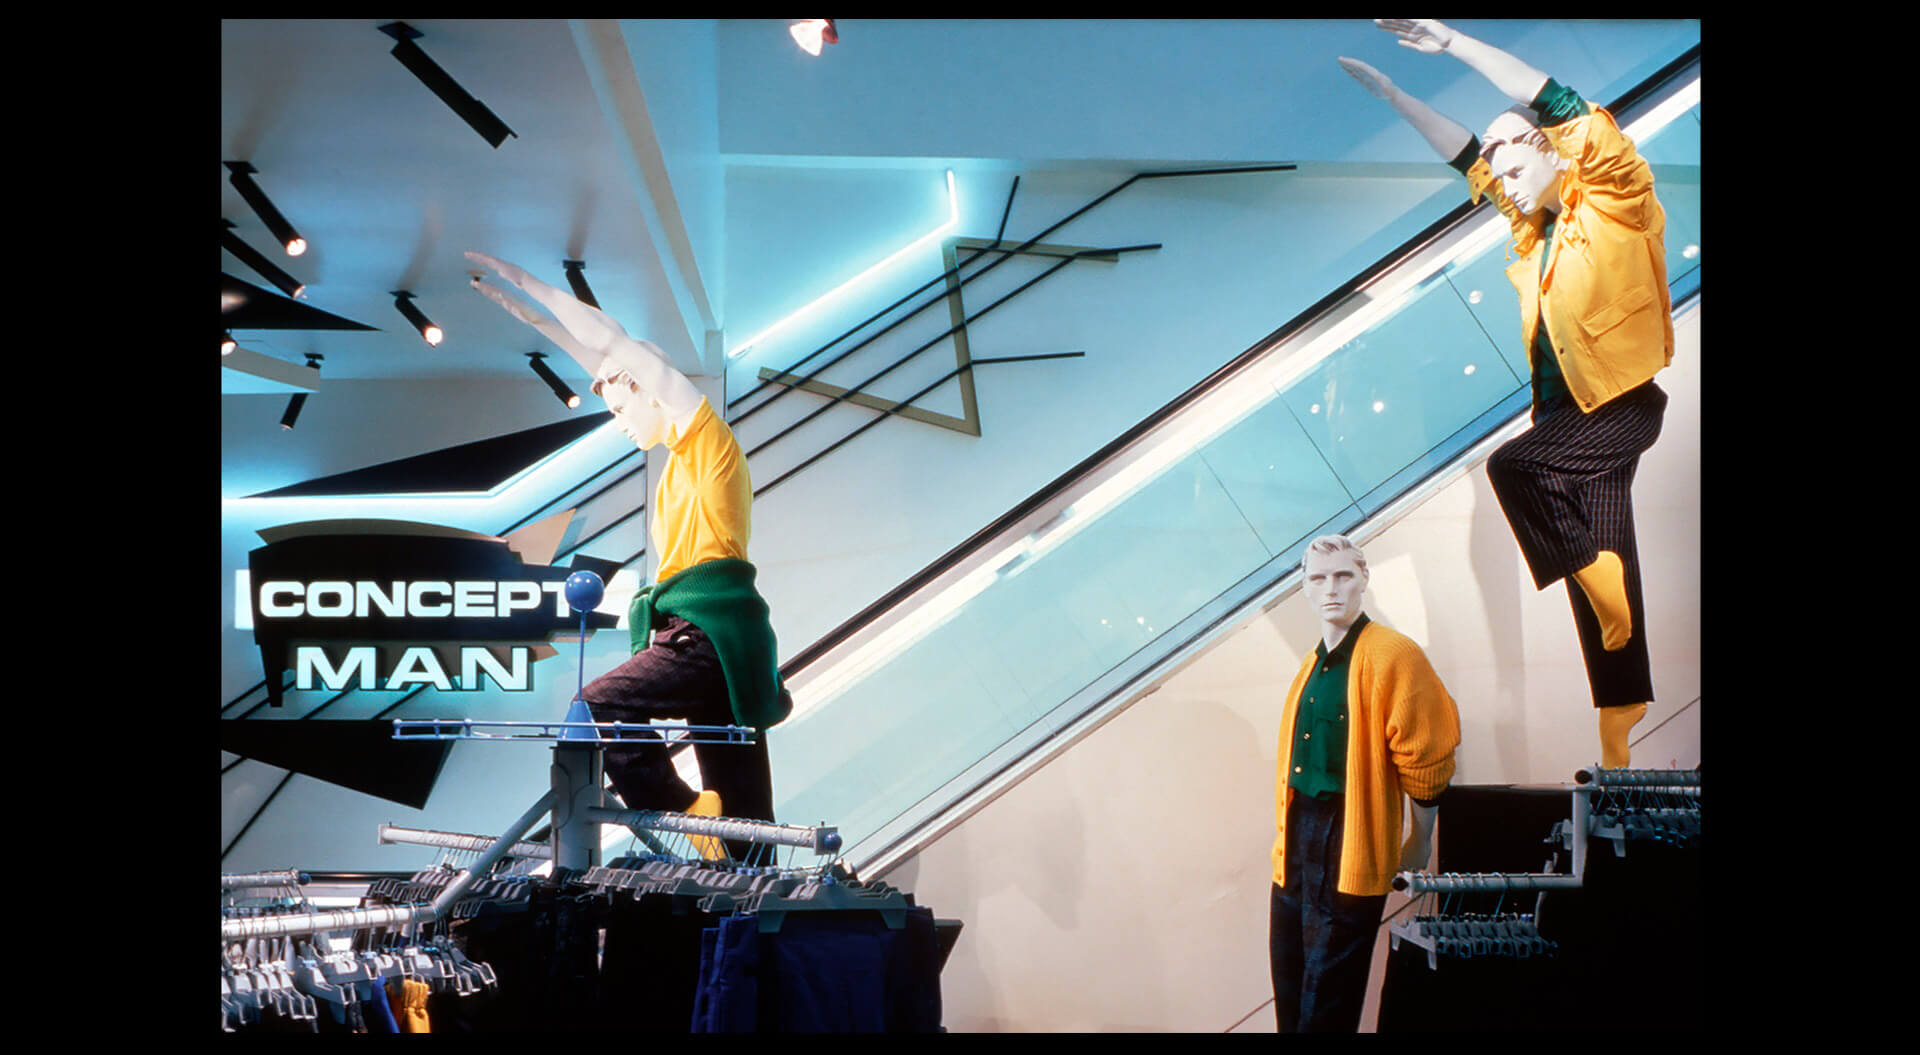 Concept Man brand interior store design internal brand signage for shop escalators